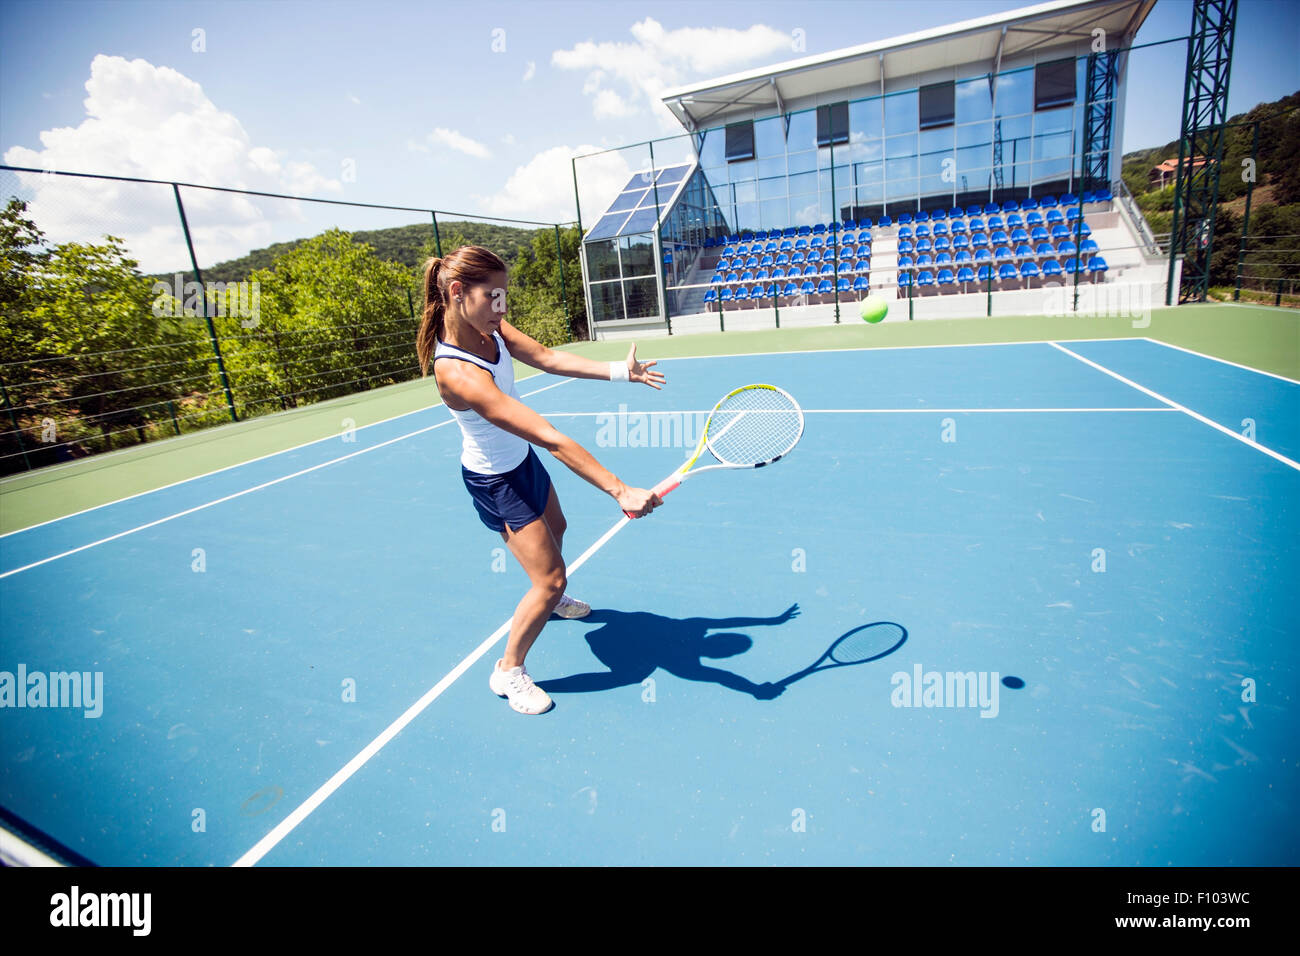 Femmina giocatore di tennis di eseguire un drop shot su una bella corte blu Foto Stock